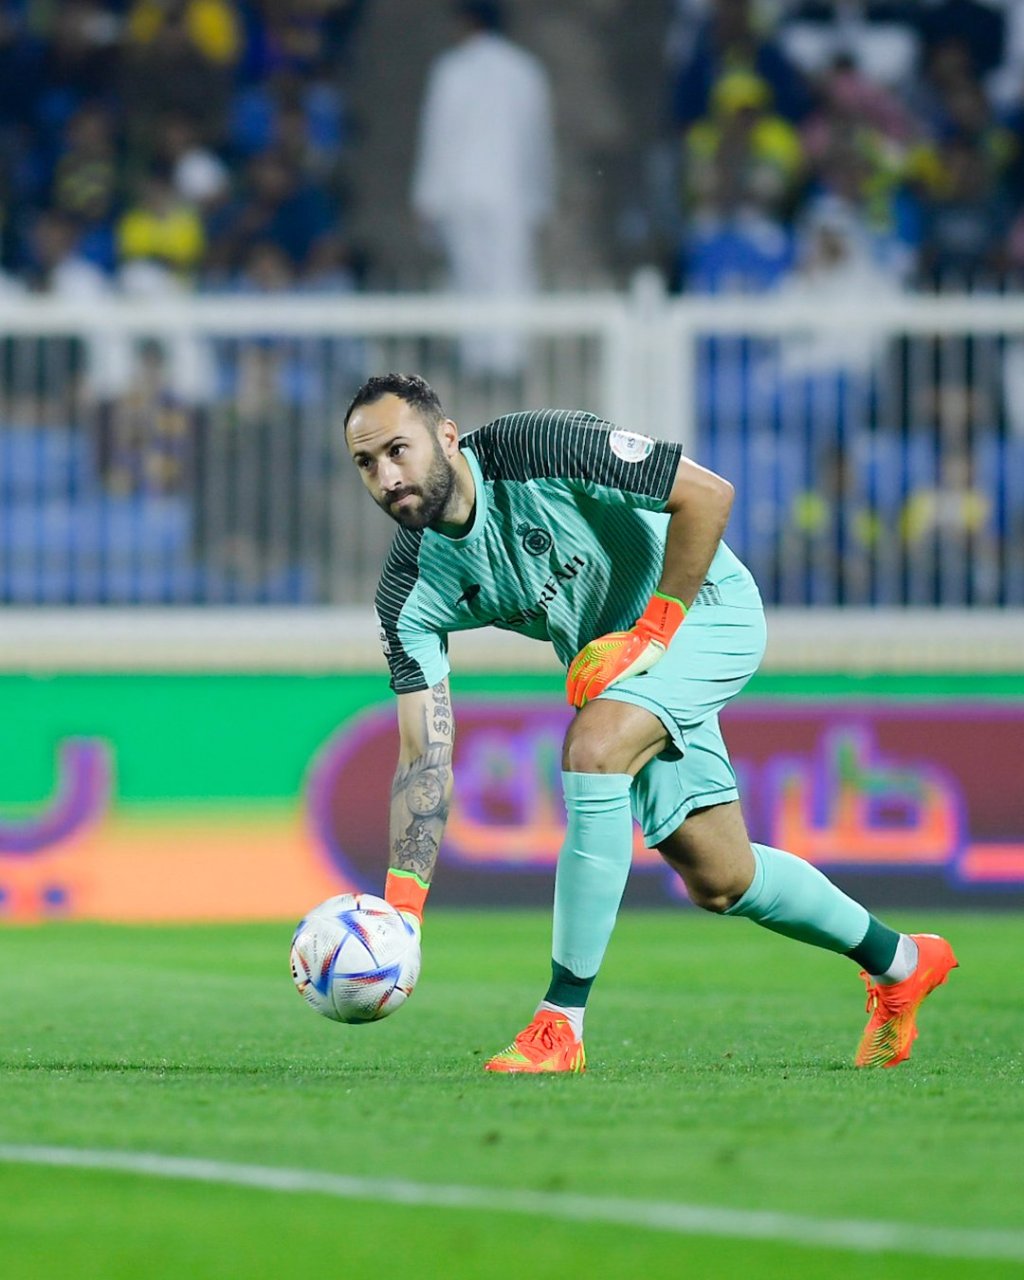 Al-Nassr goalkeeper convinced to return back home